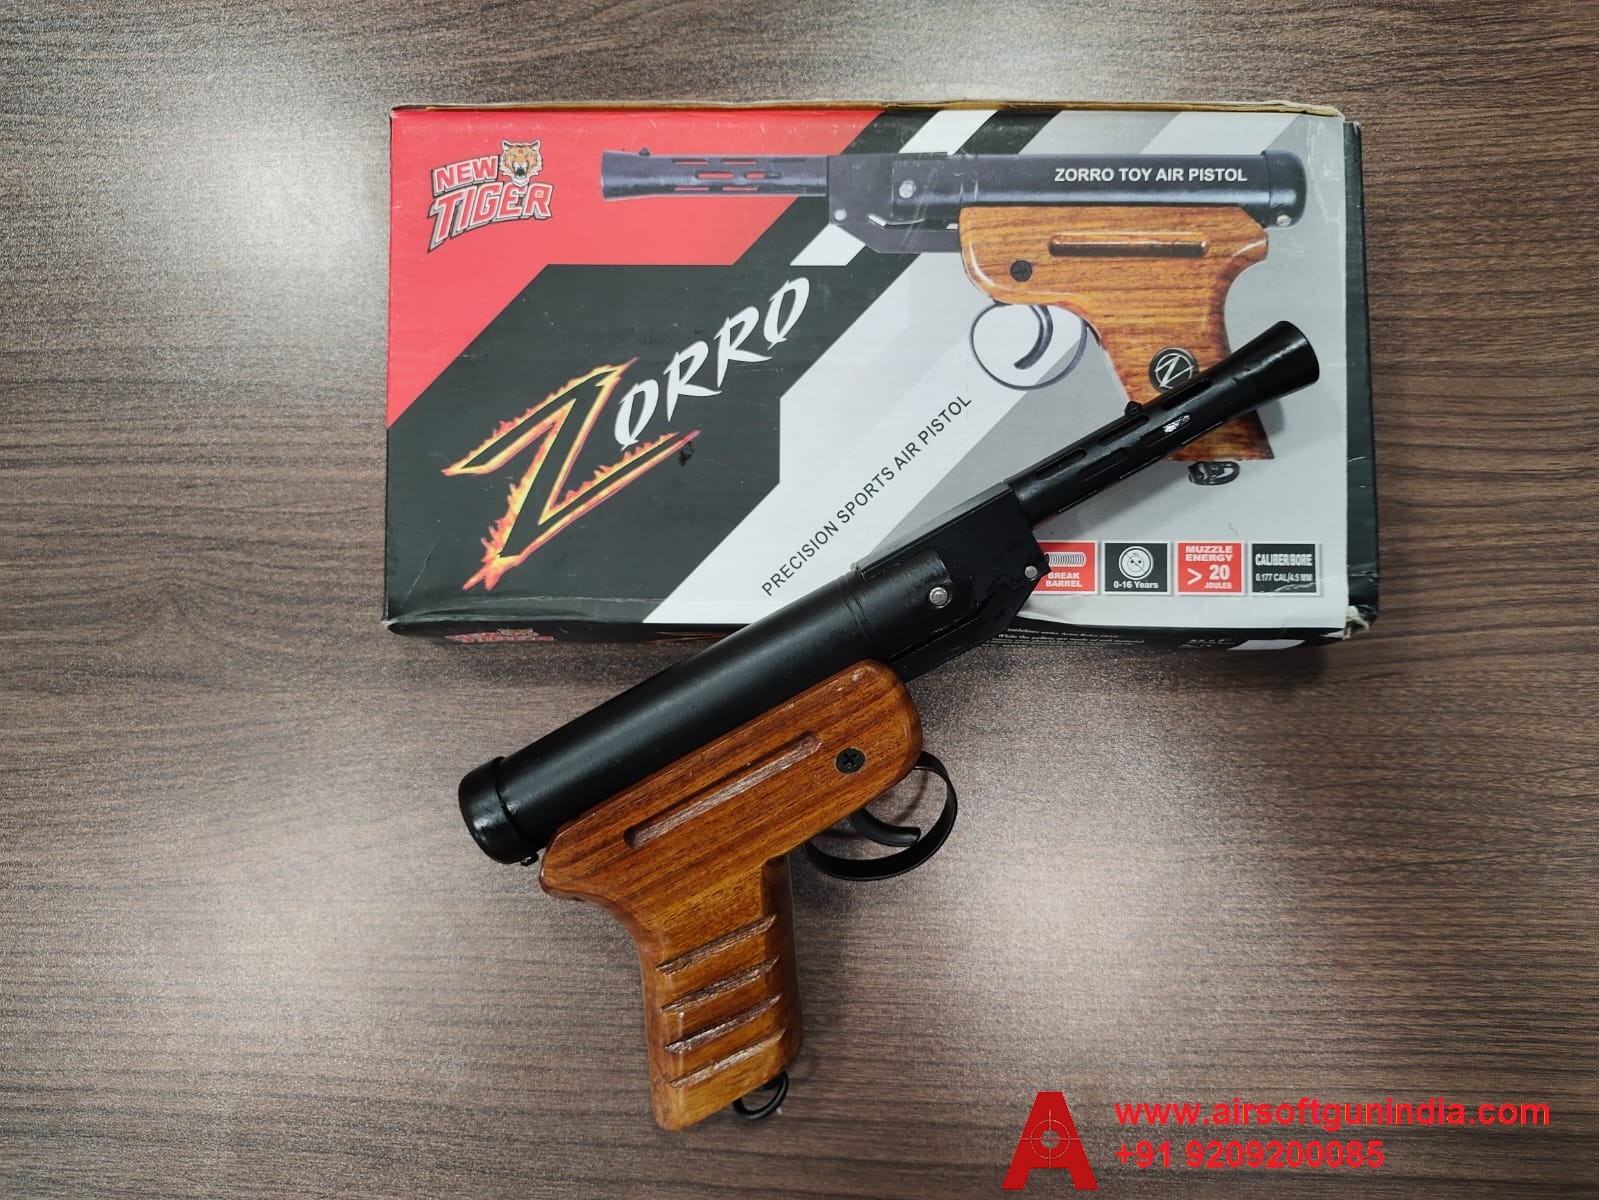 Zorro Wooden Single-Shot .177 Caliber / 4.5 Mm Indian Air Pistol By Airsoft Gun India